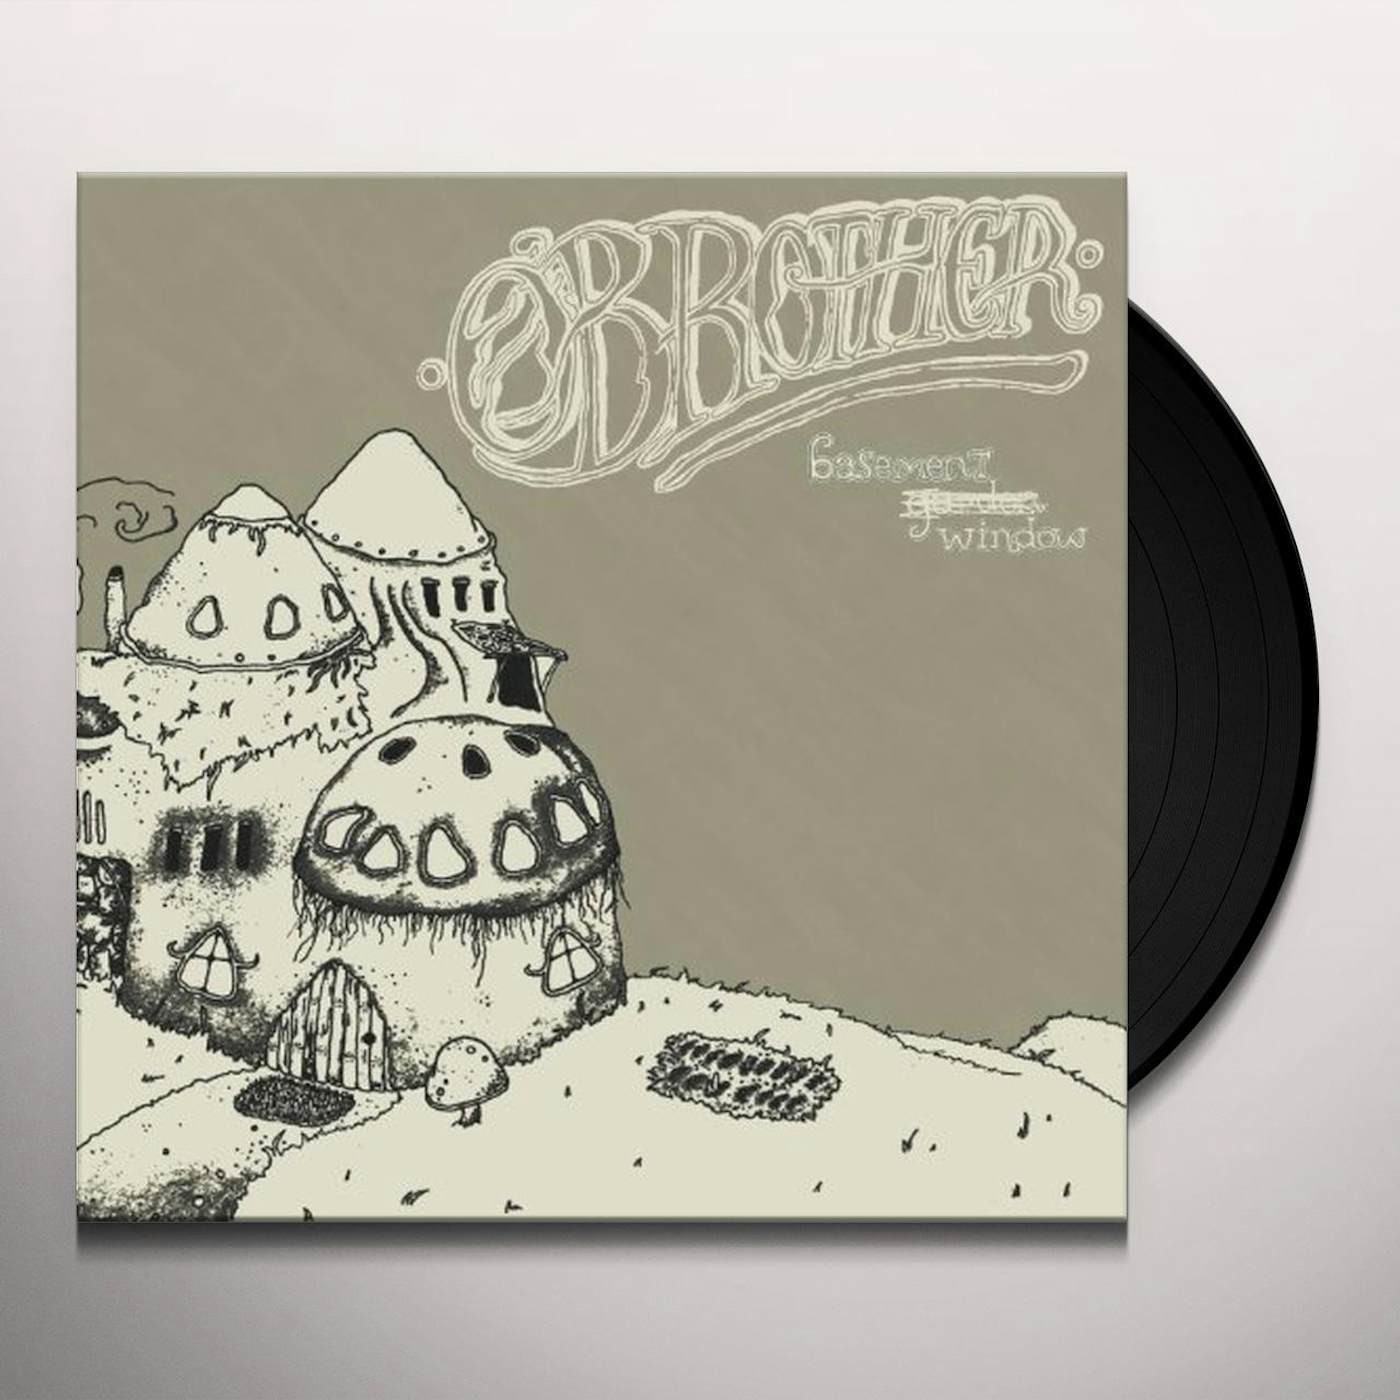 O'Brother Basement Window Vinyl Record